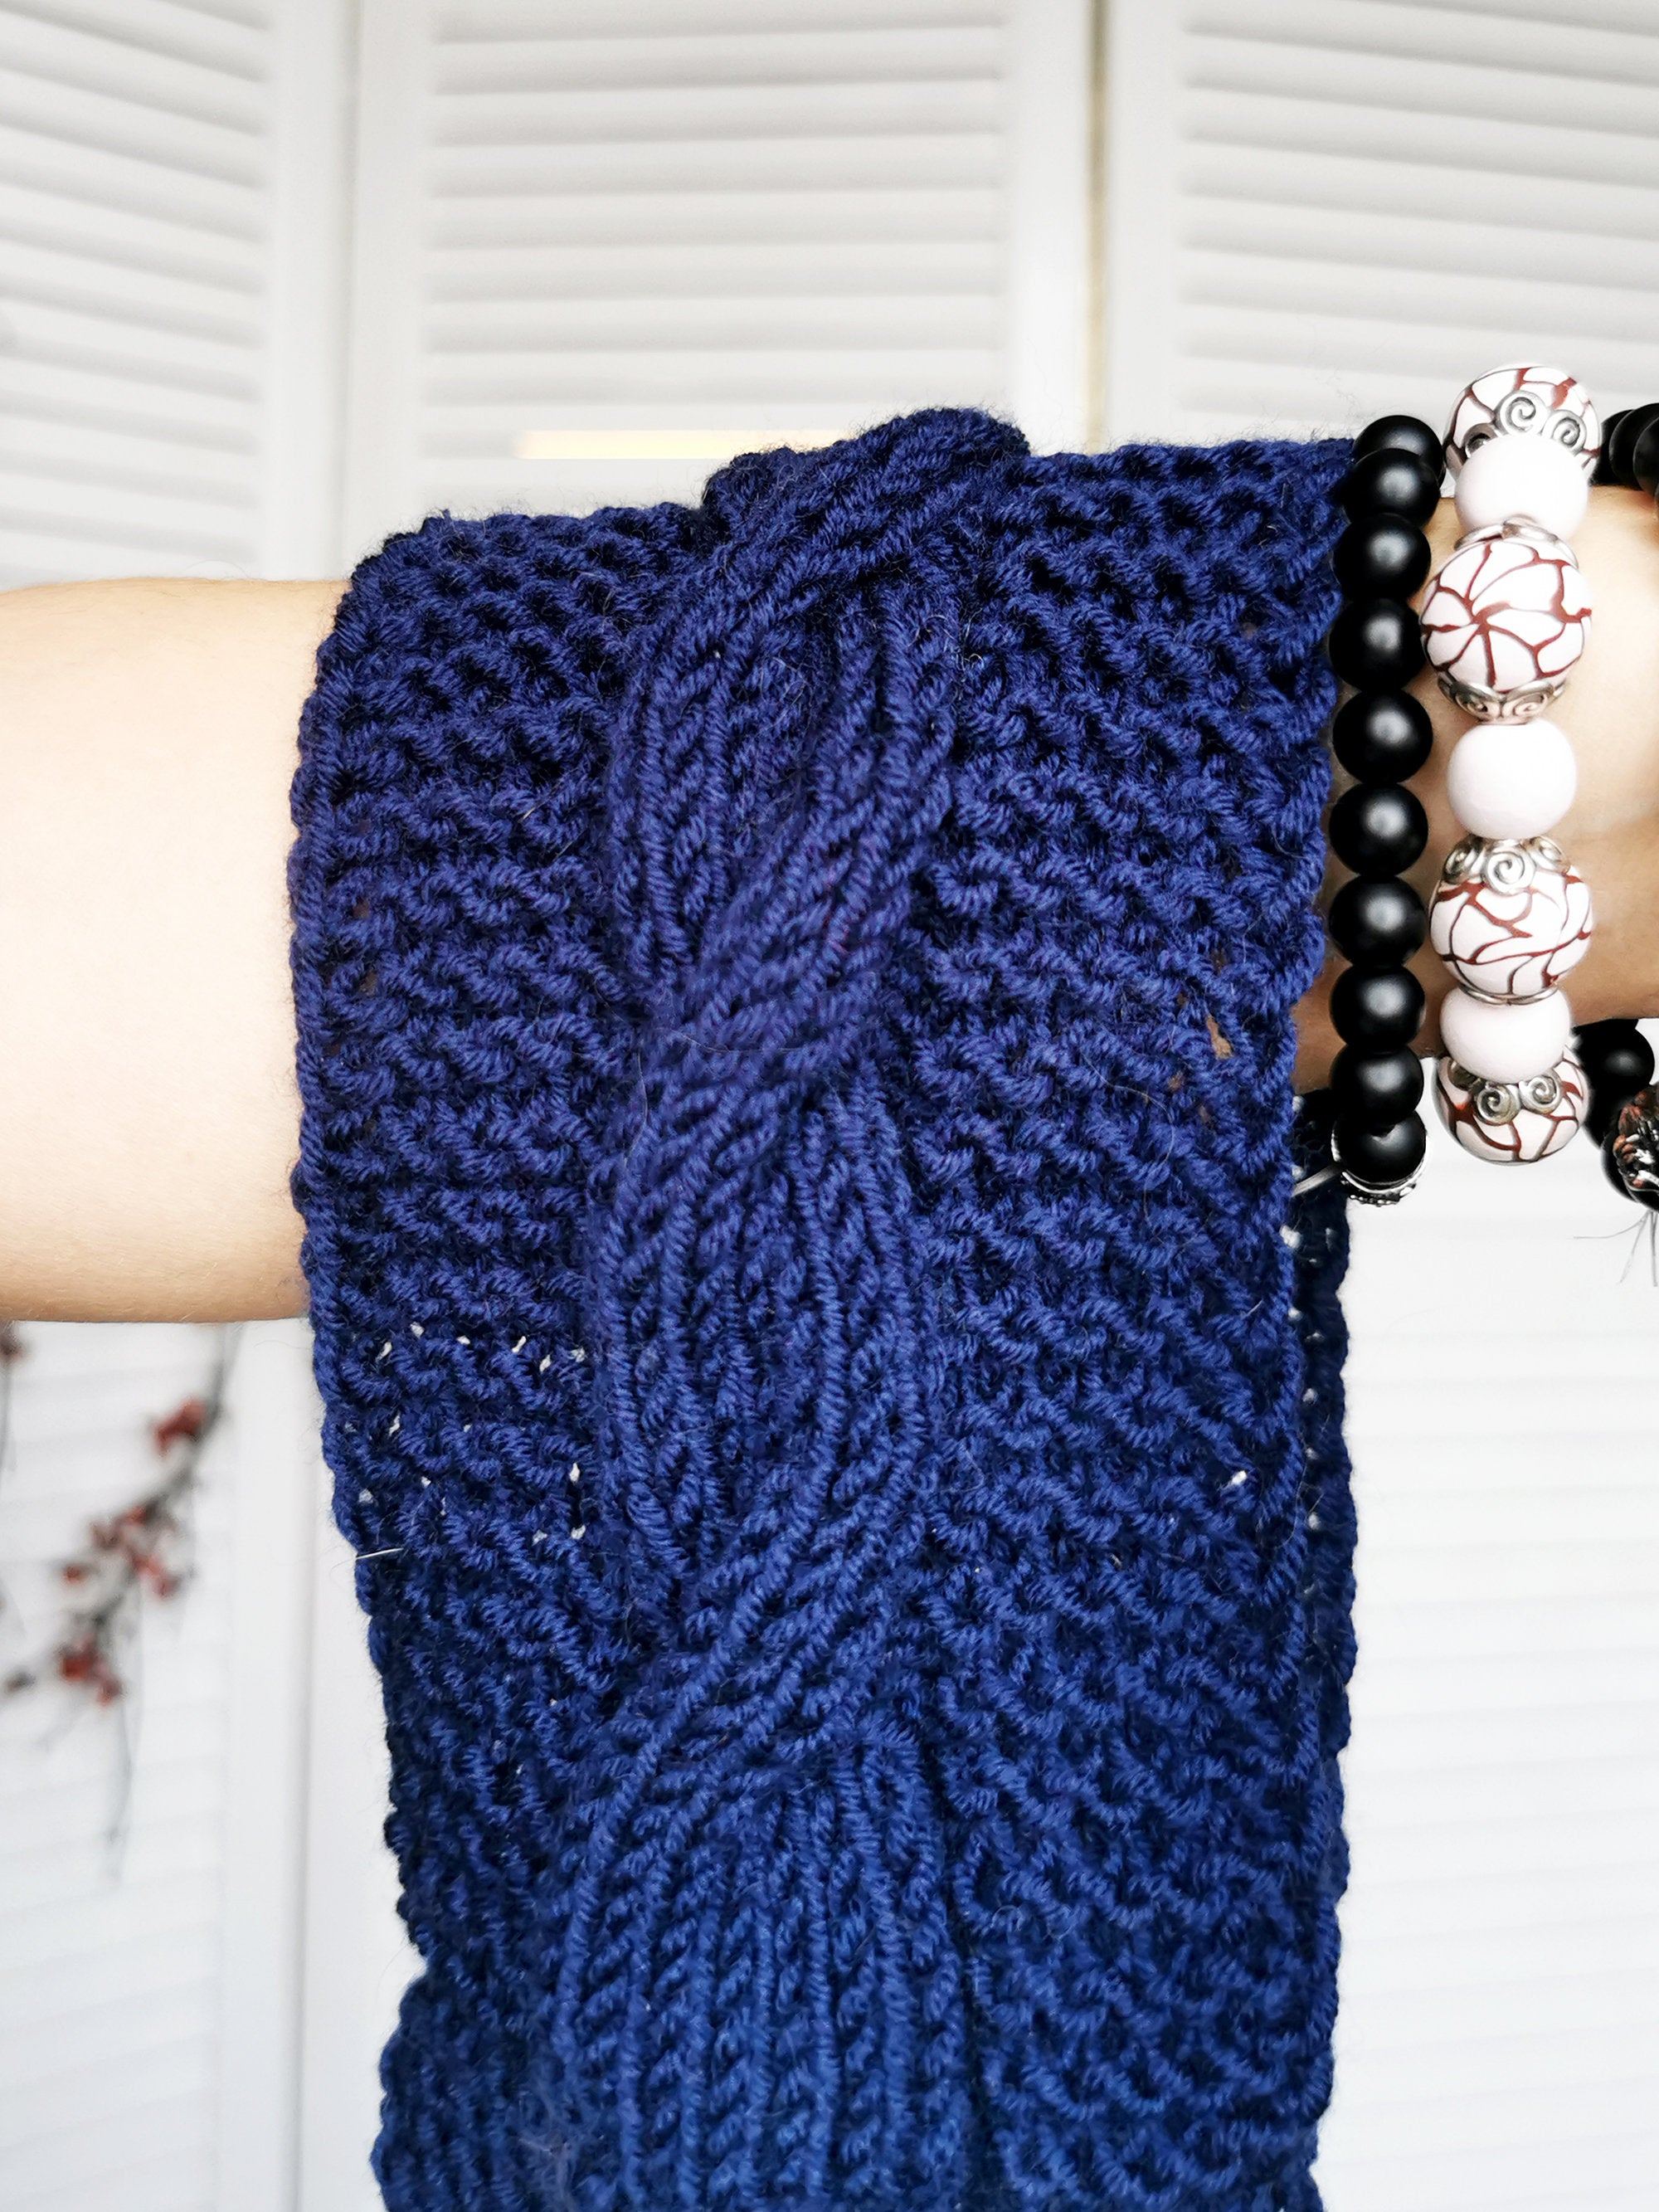 Merino wool handmade knitted winter headband in navy blue